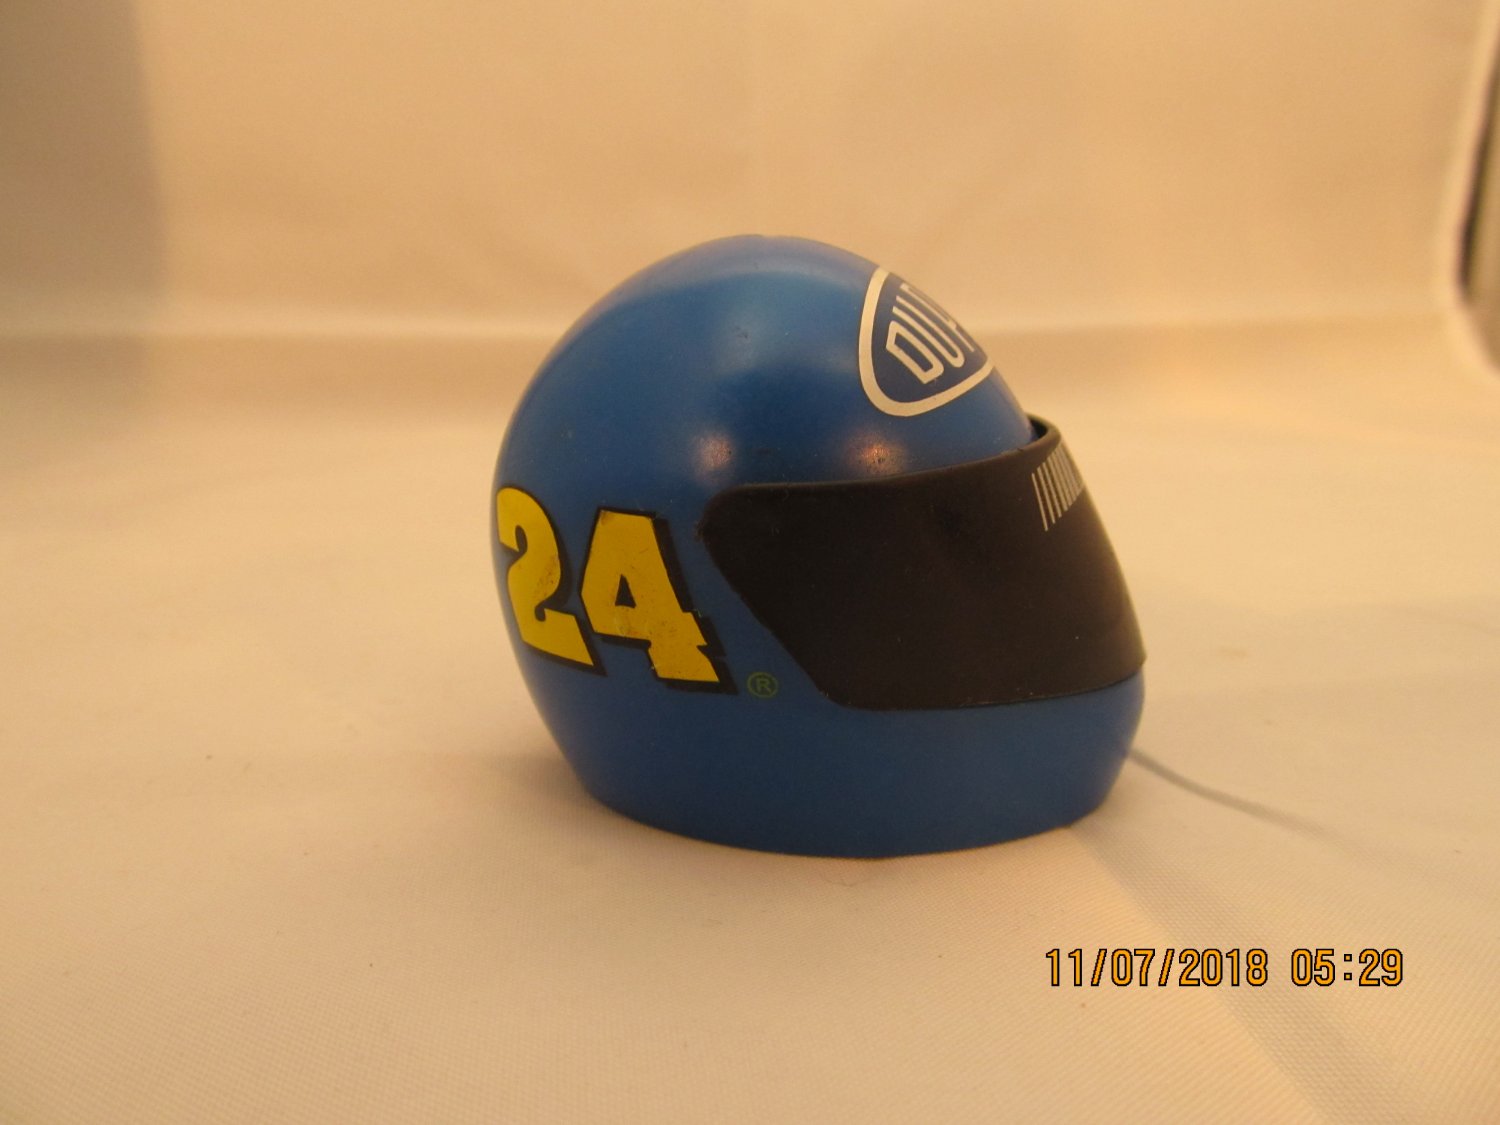 2003 Nascar #24 Dupont Mini Race Helmet Antenna Ball